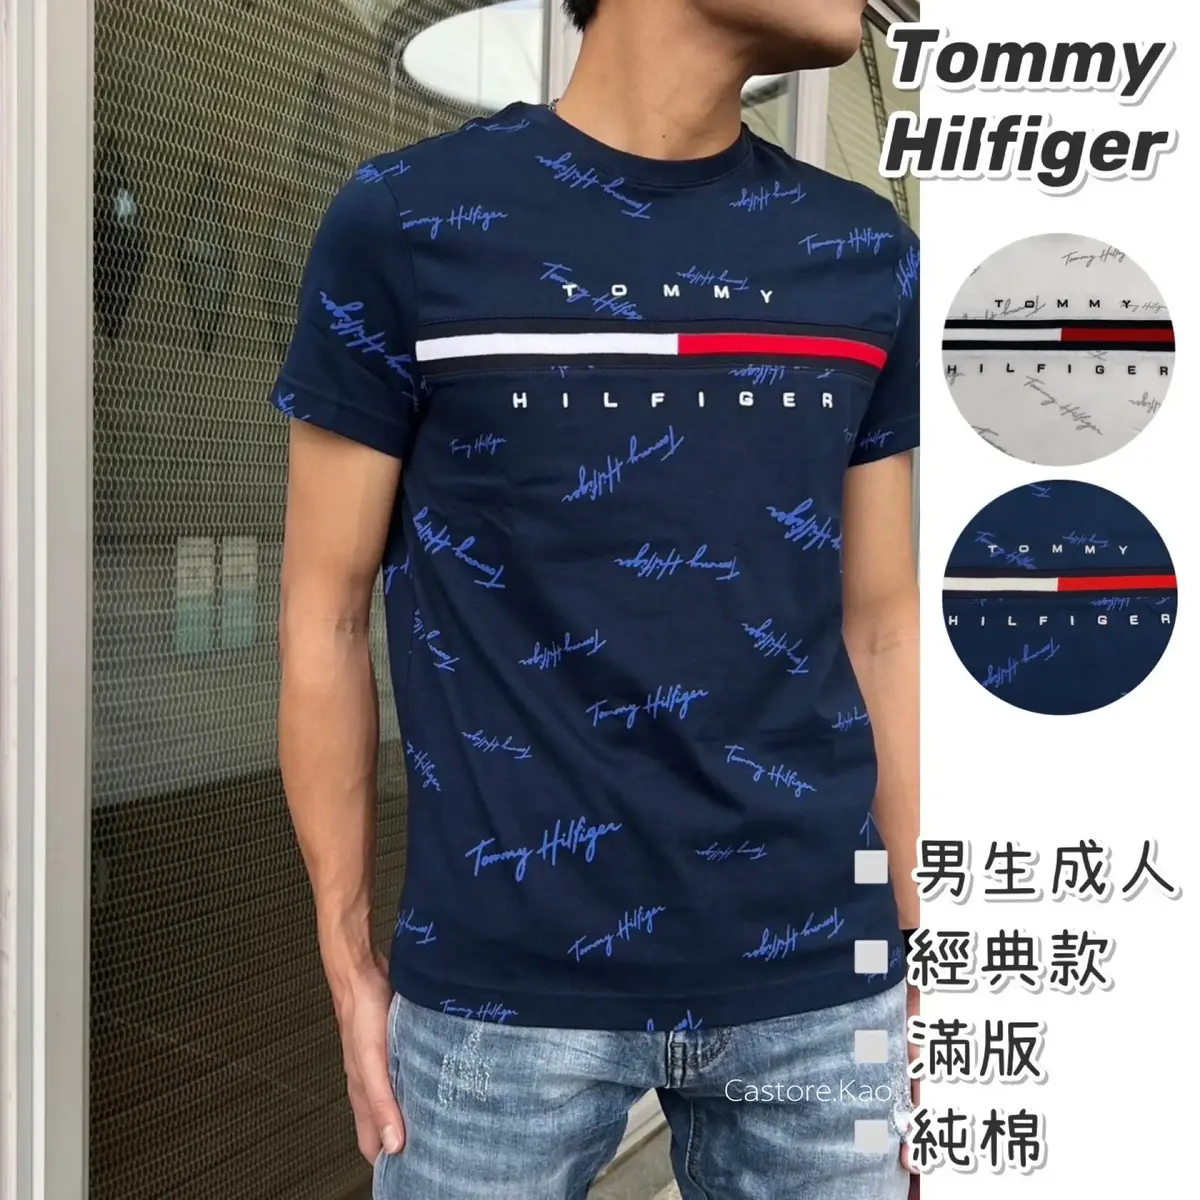 【Tommy Hilfiger】 男生短T 成人版型 經典滿版LOGO款「加州歐美服飾-高雄」#0101162 #0101240